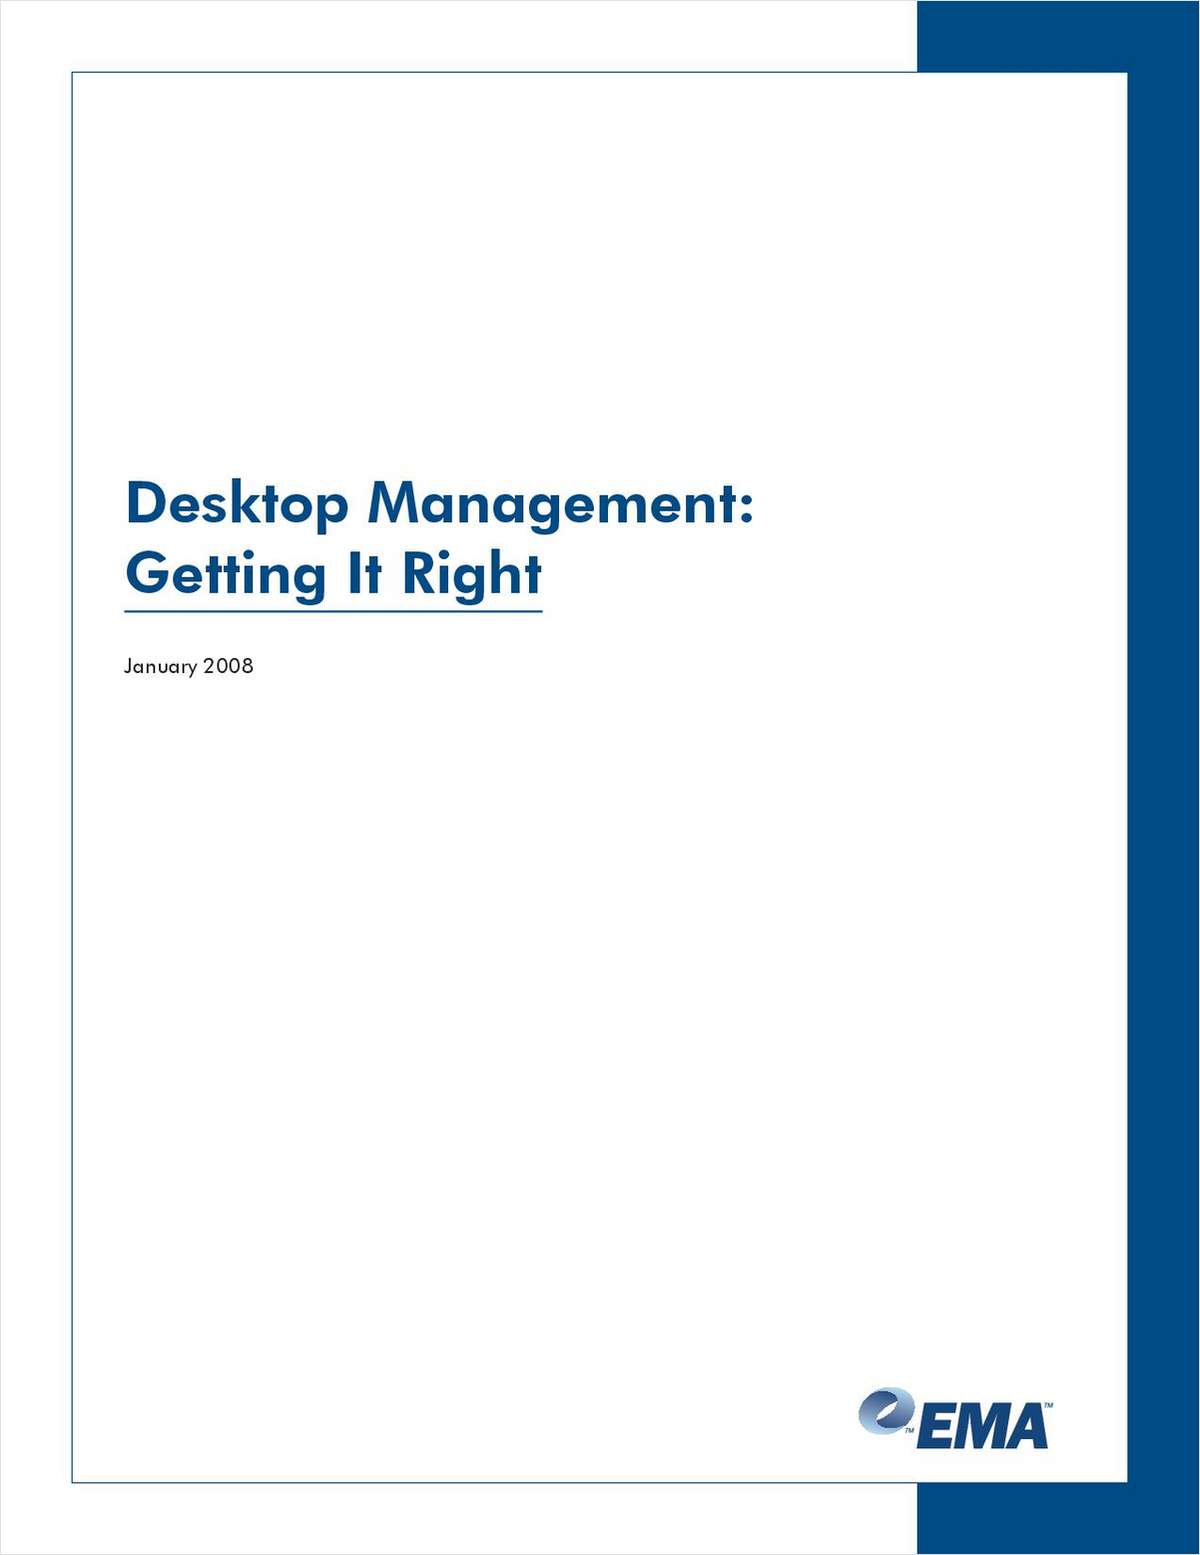 Desktop Management: Getting It Right